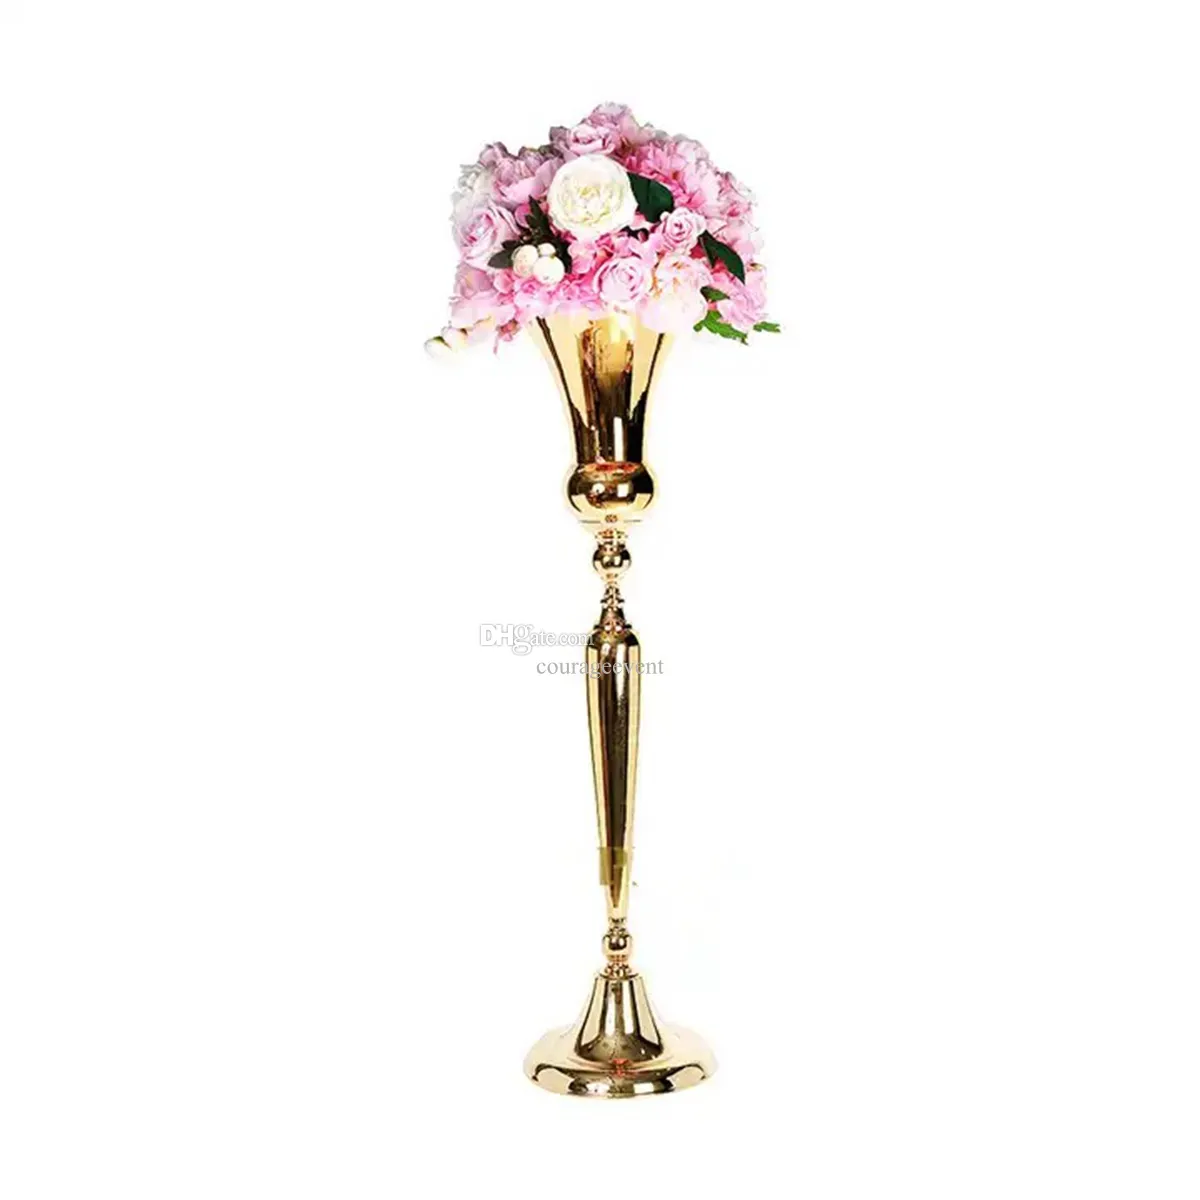 80cm ~ 120cm) 금 금속 꽃병 테이블 중심 장식 트럼펫 꽃 스탠드 디자인 결혼식 크리스마스 이벤트 파티 장식